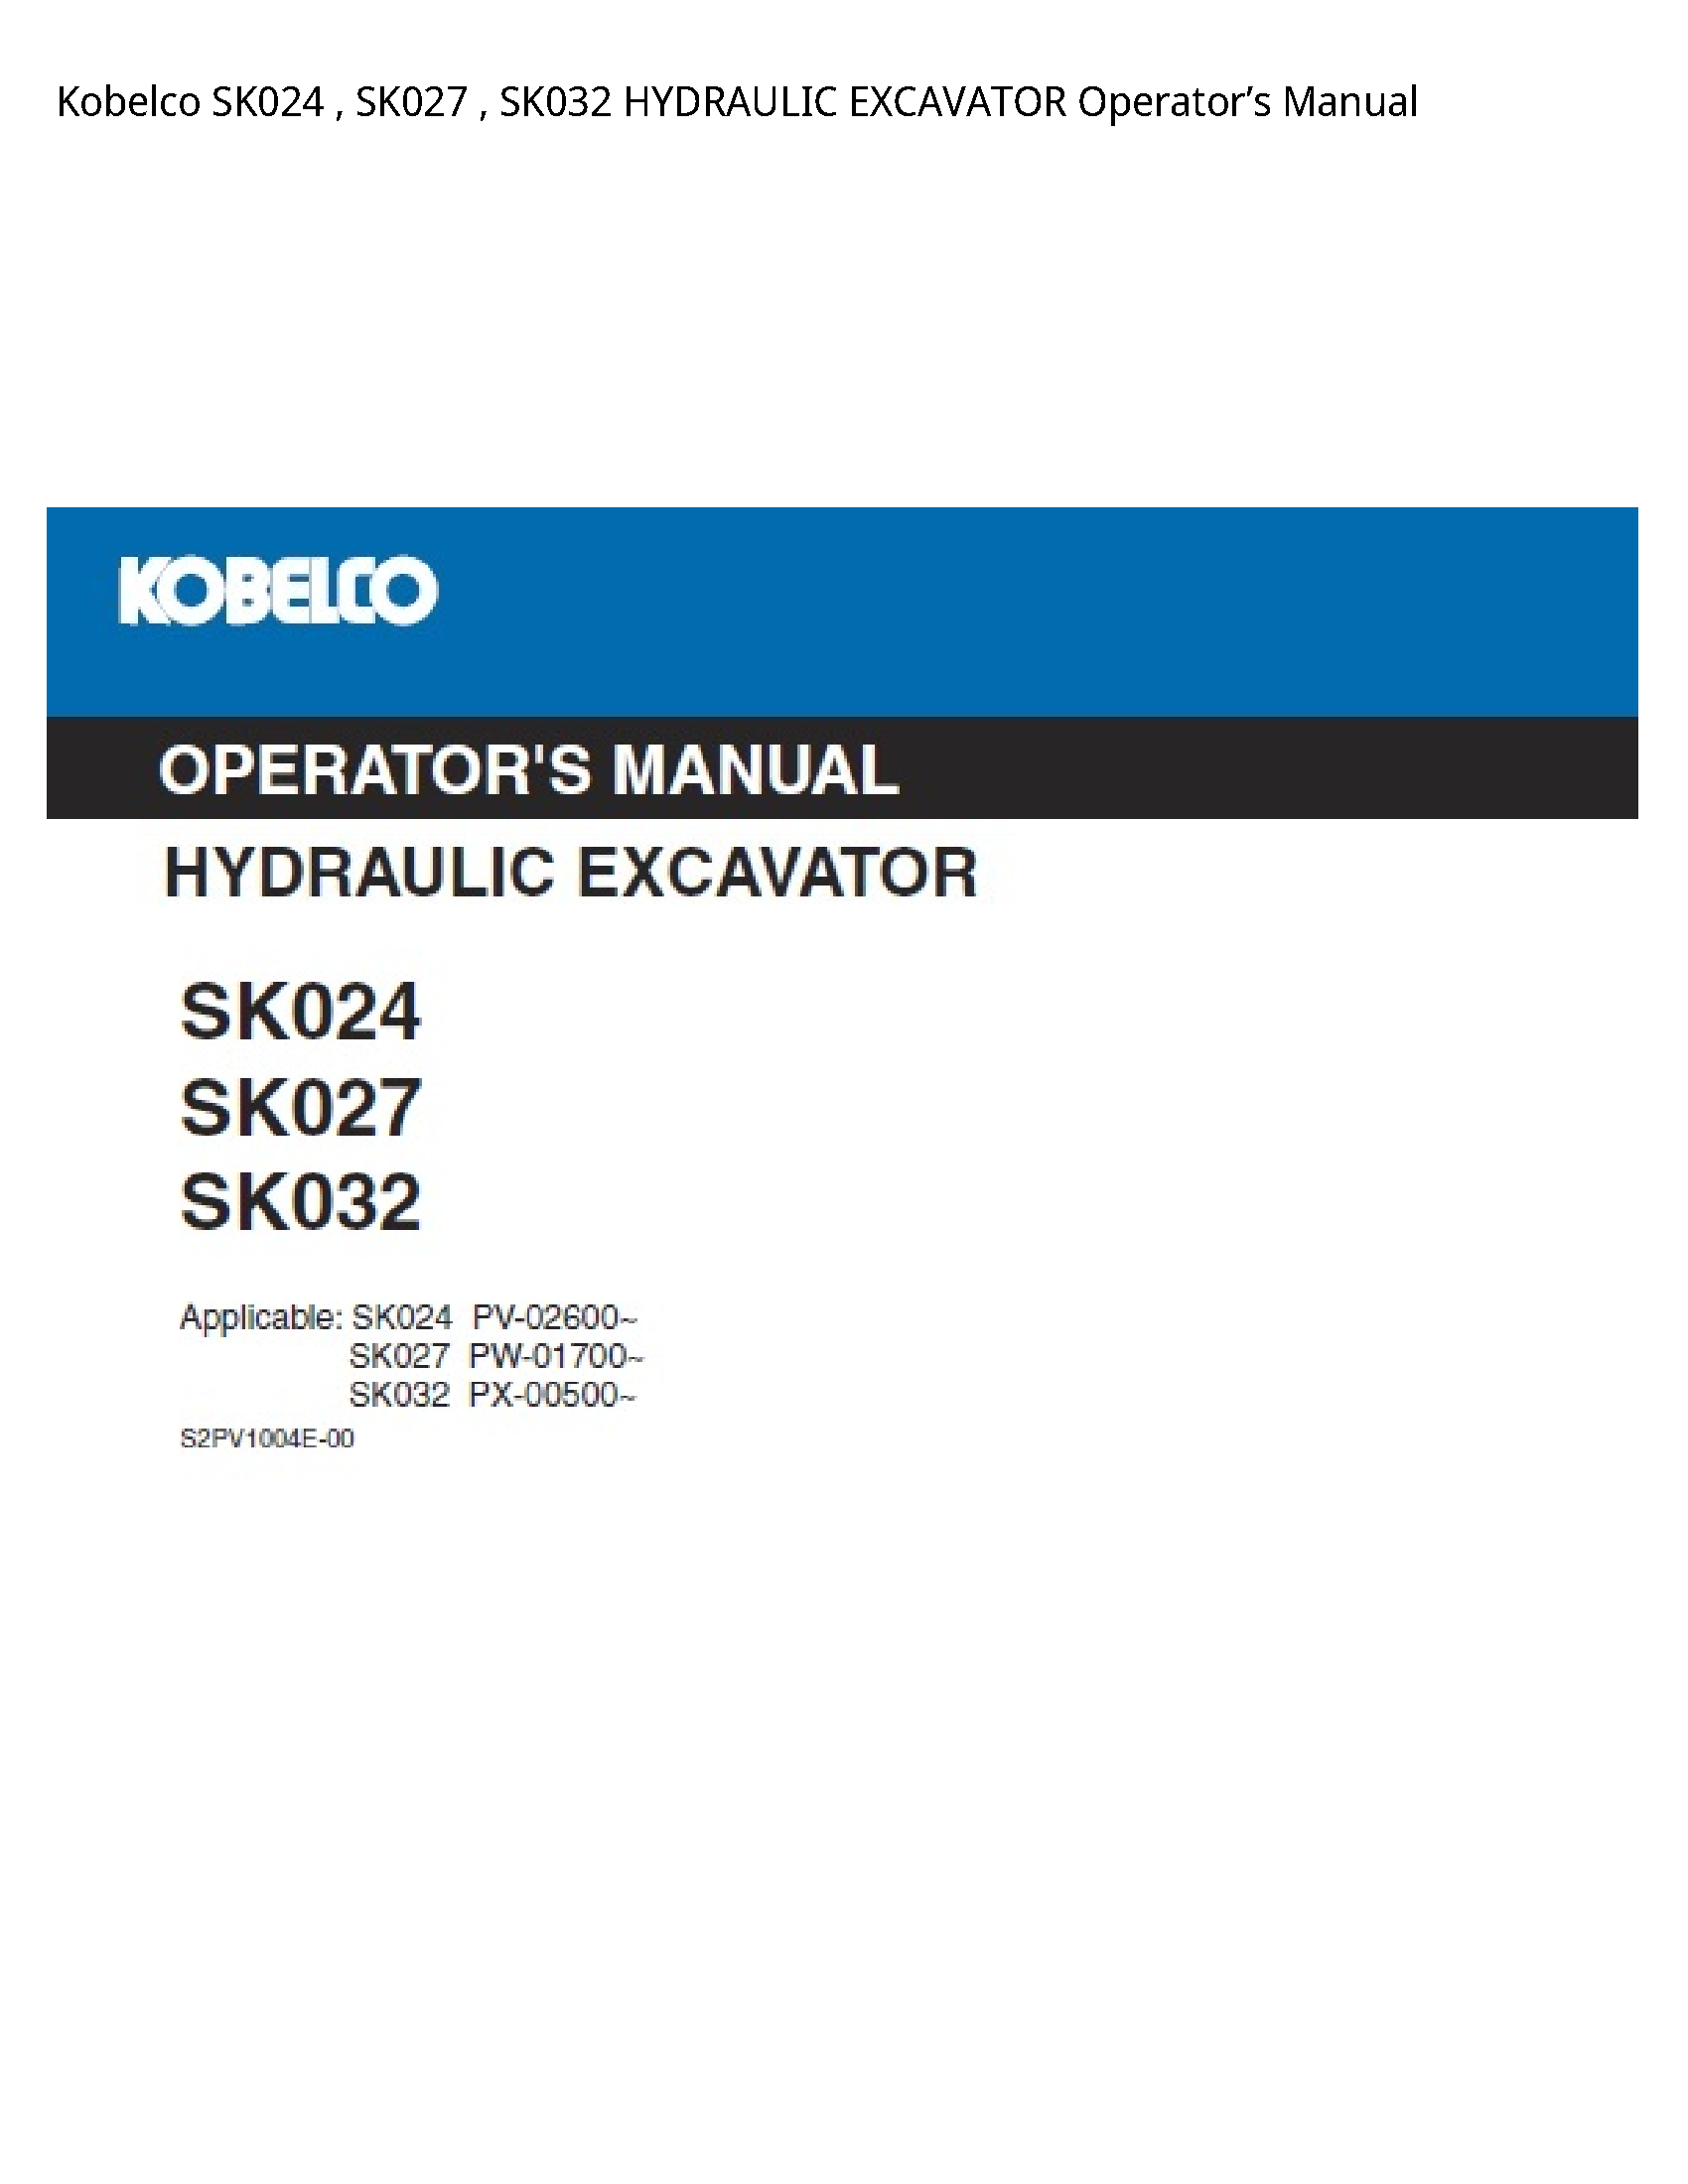 Kobelco SK024 HYDRAULIC EXCAVATOR Operator’s manual